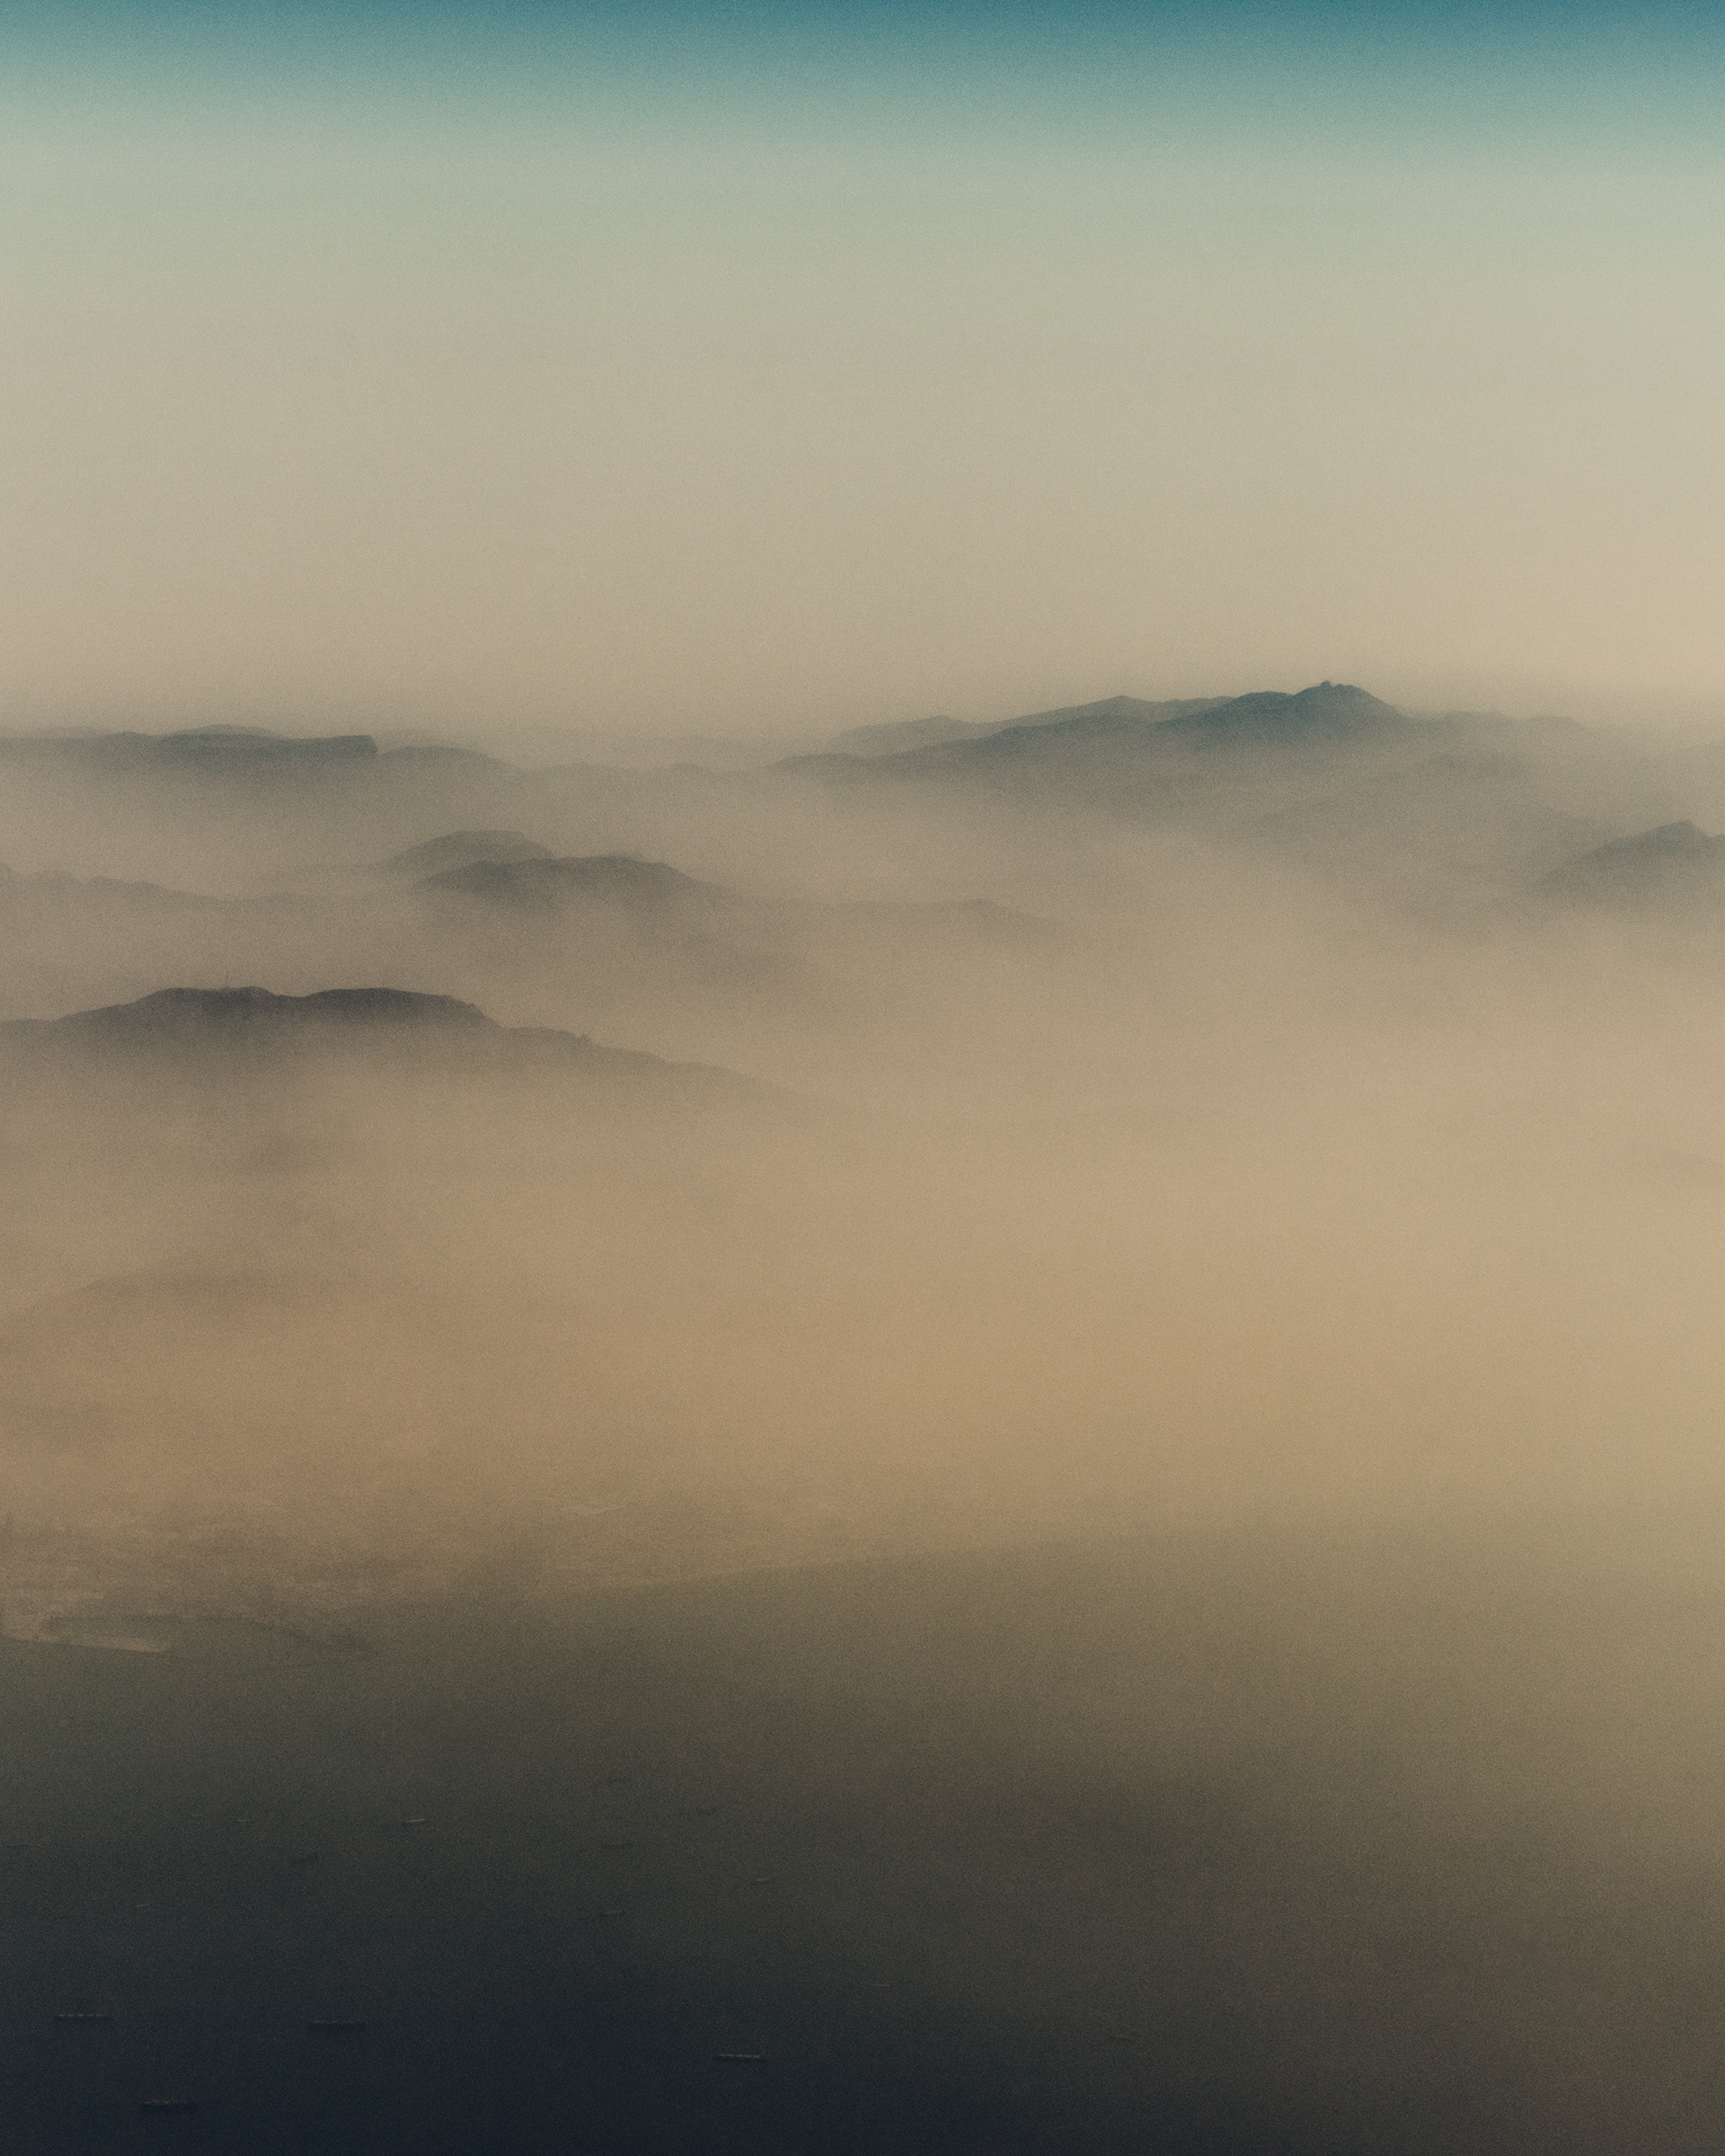 A hazy view on the approach to Dubai International Airport. (Thomas Prior)